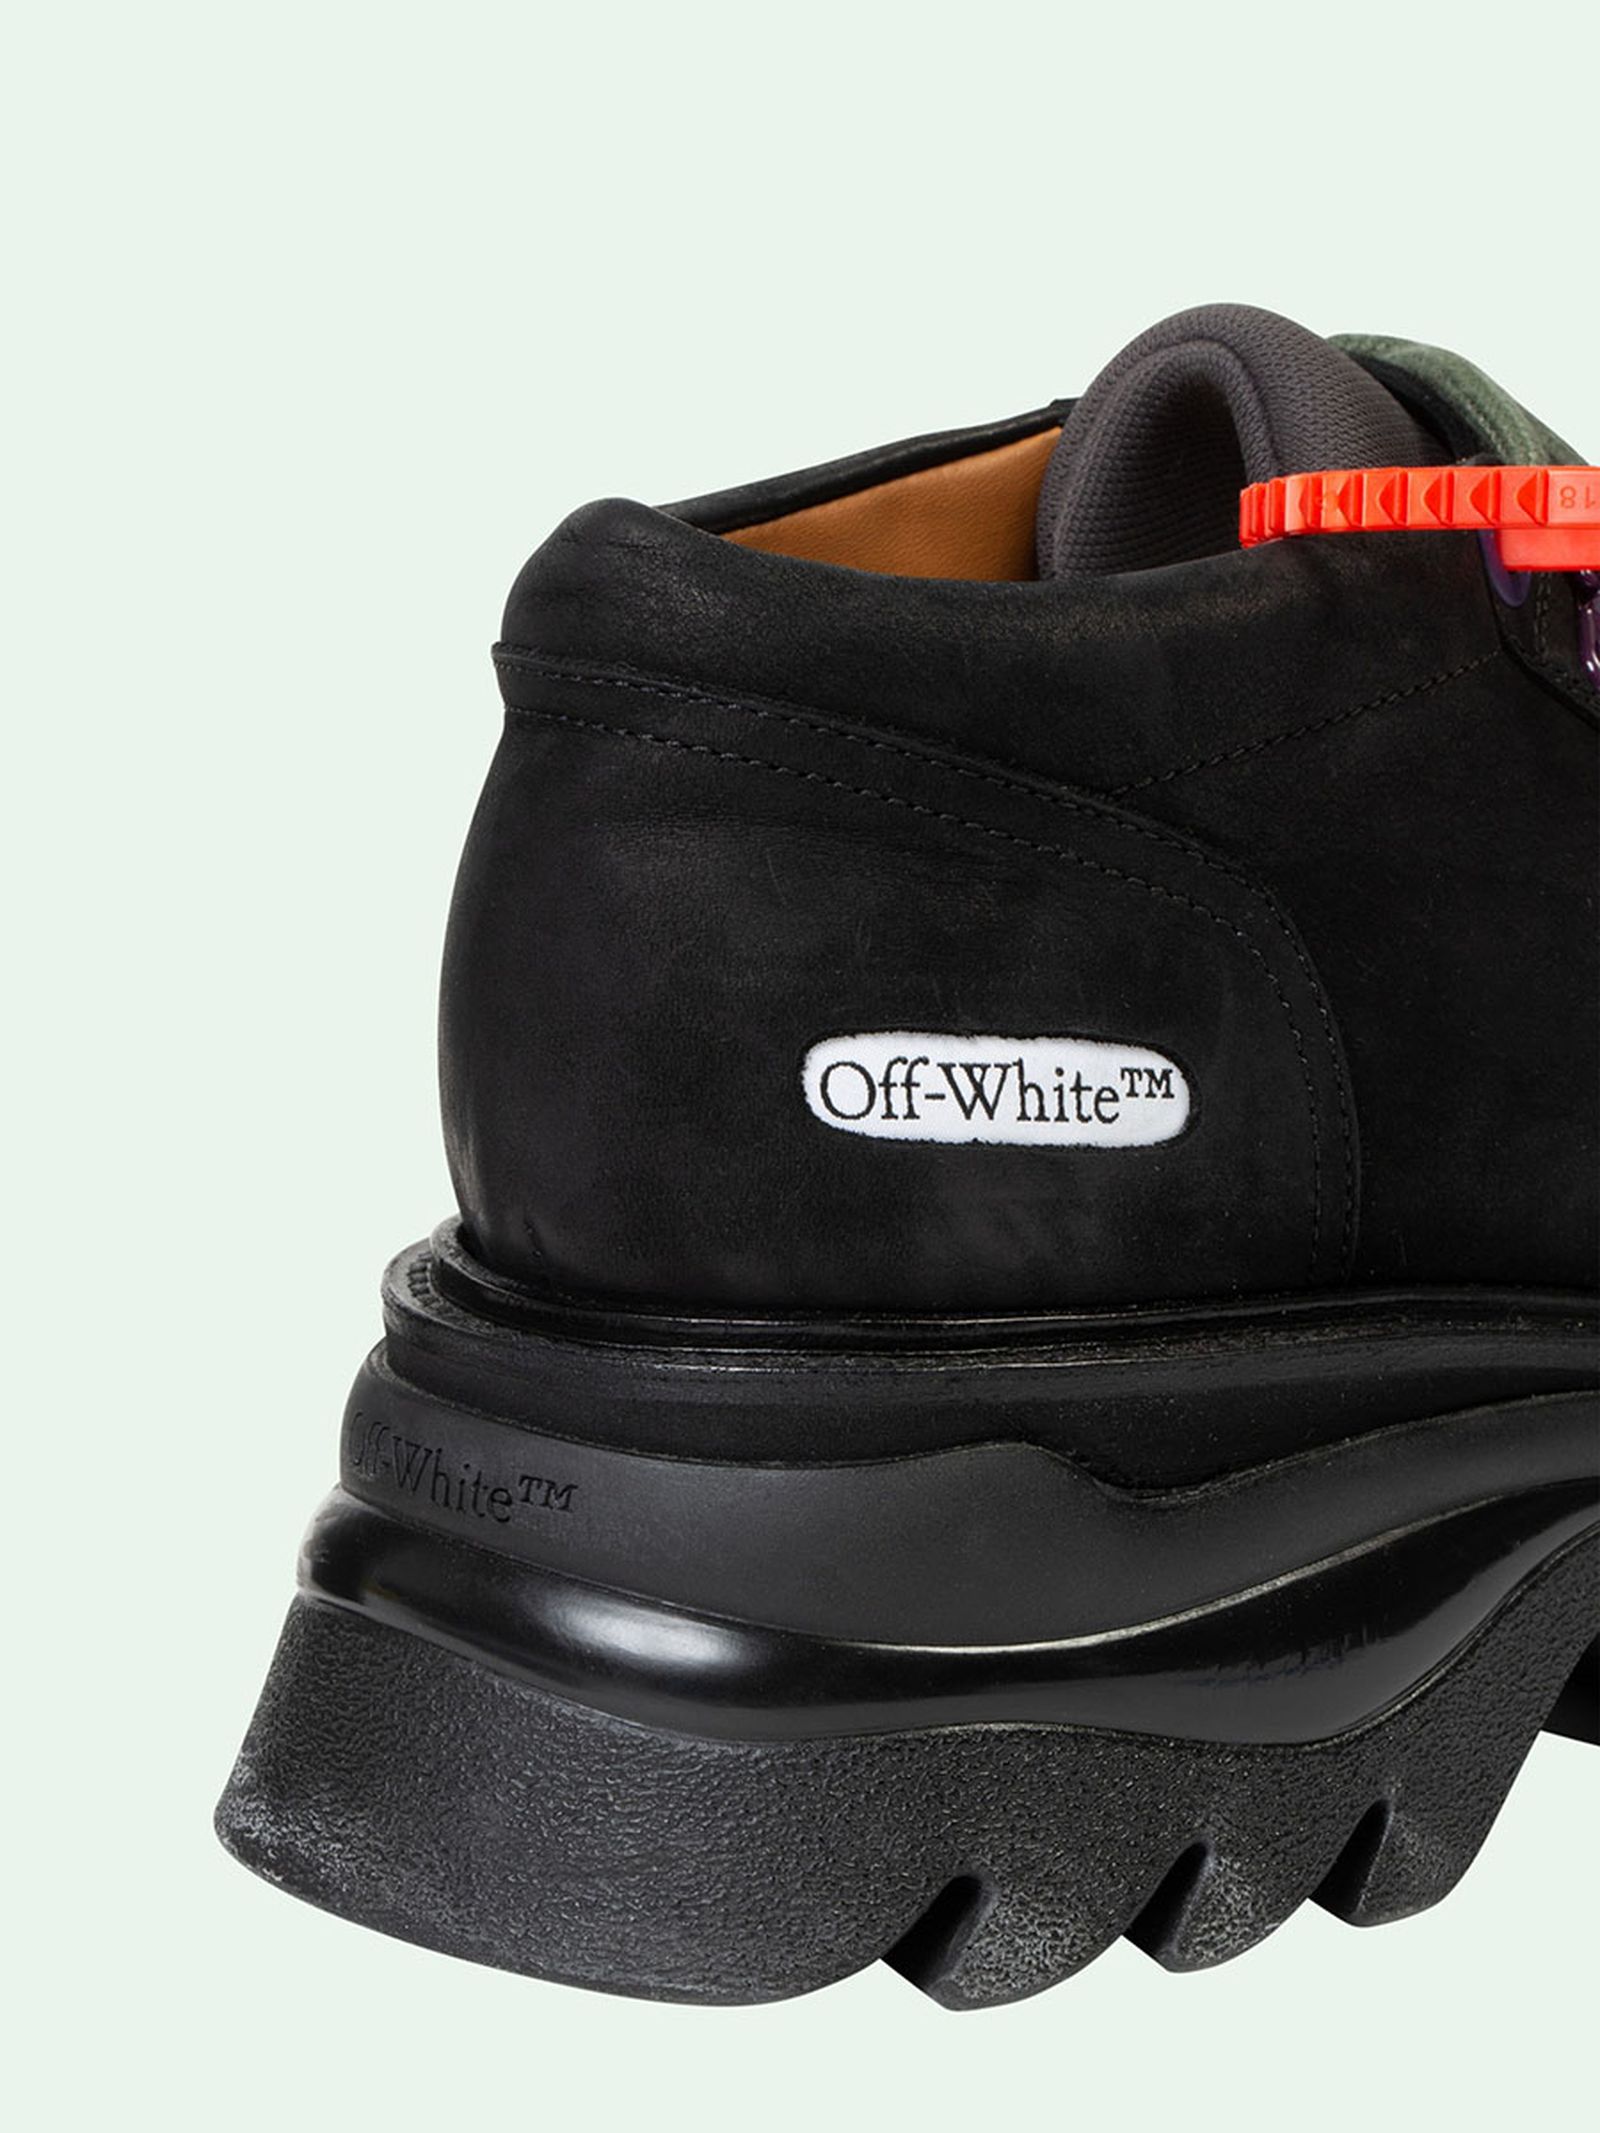 off-white-ridged-sole-sneaker-release-date-price-04